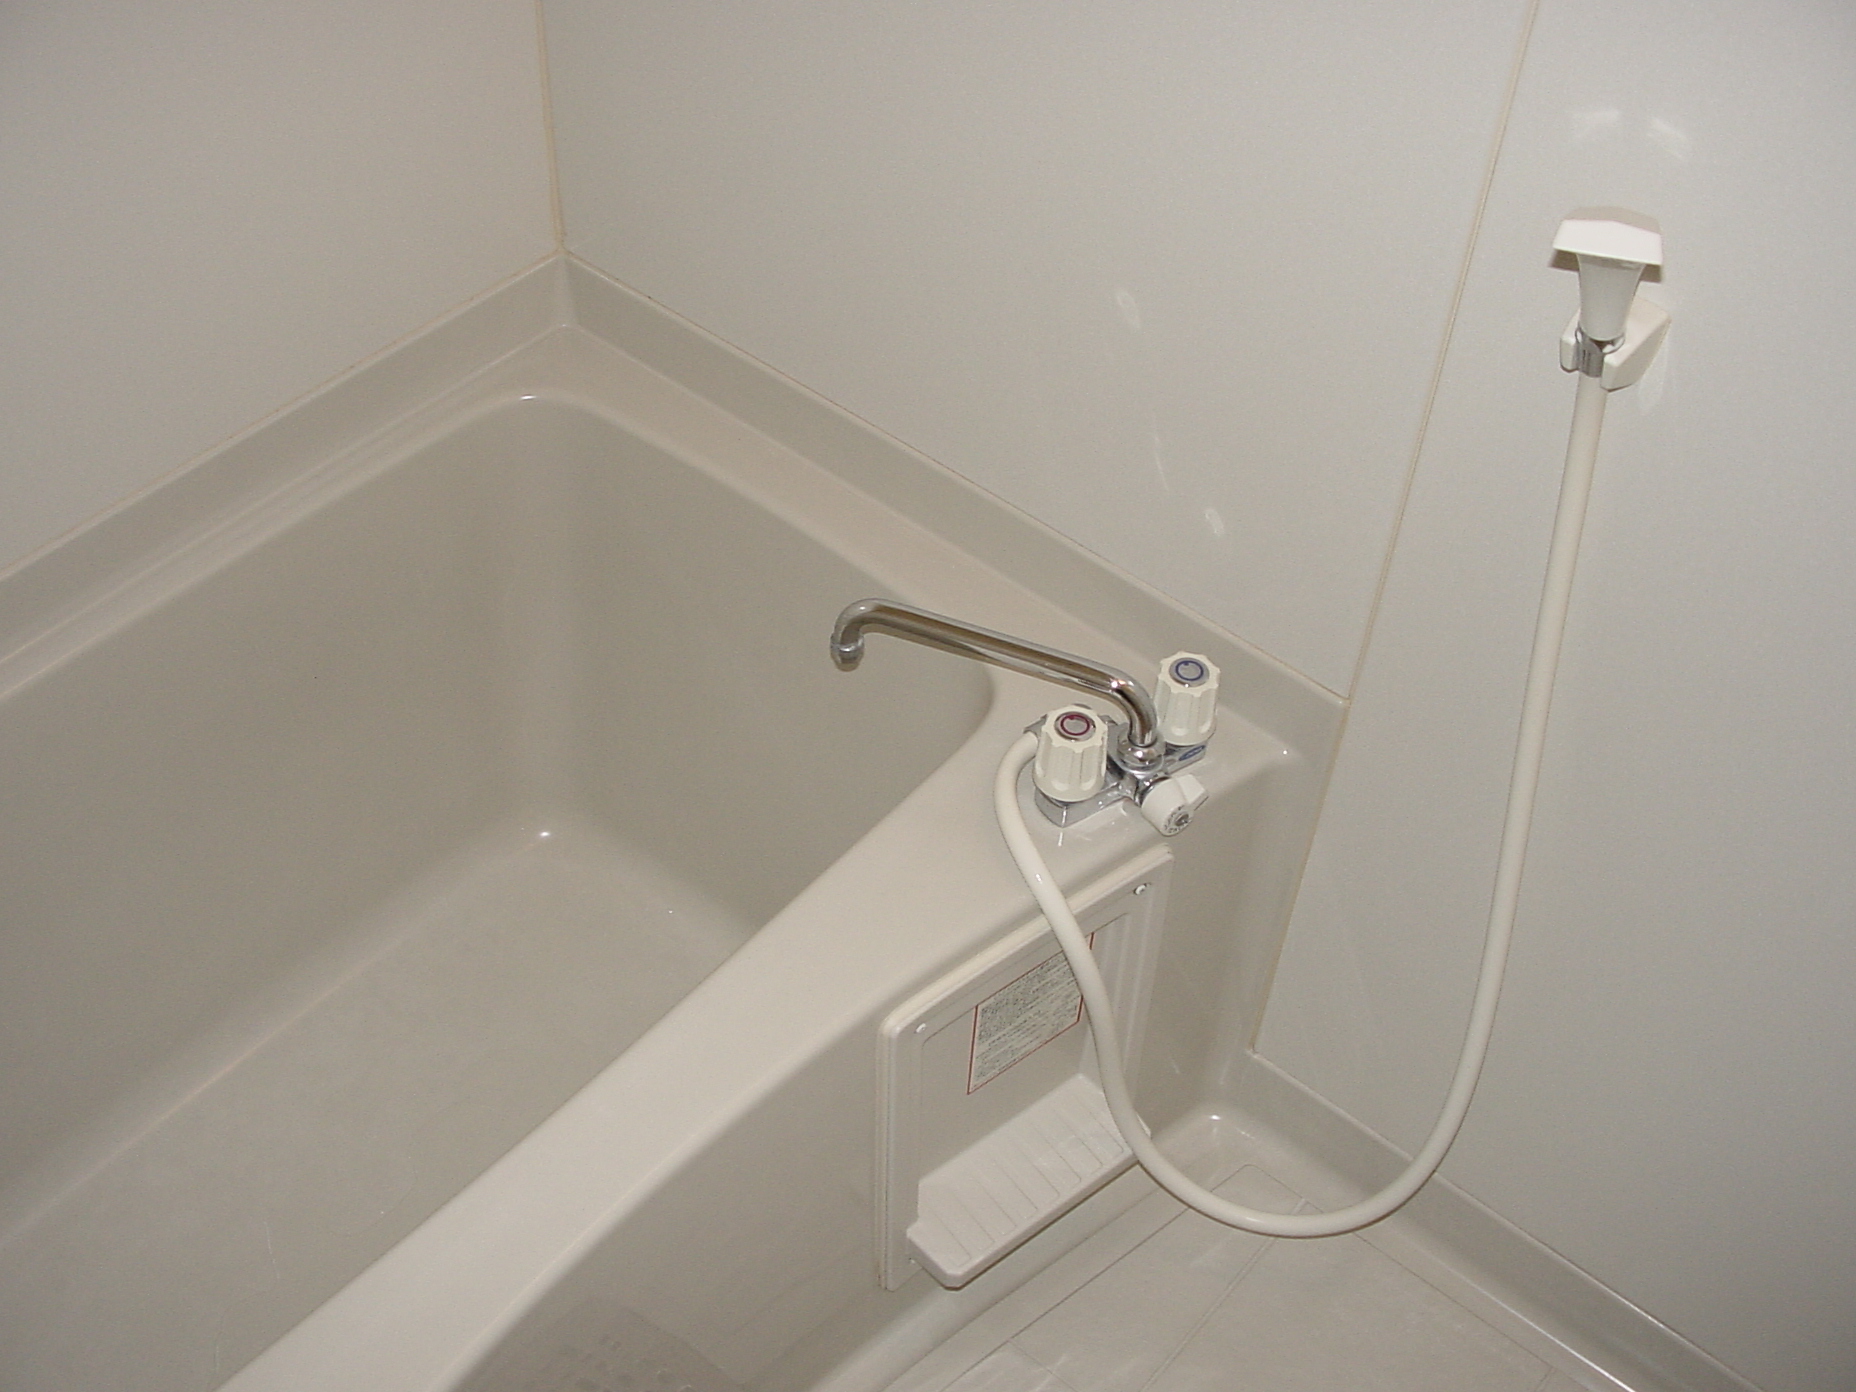 Bath. Same property Other room reference image